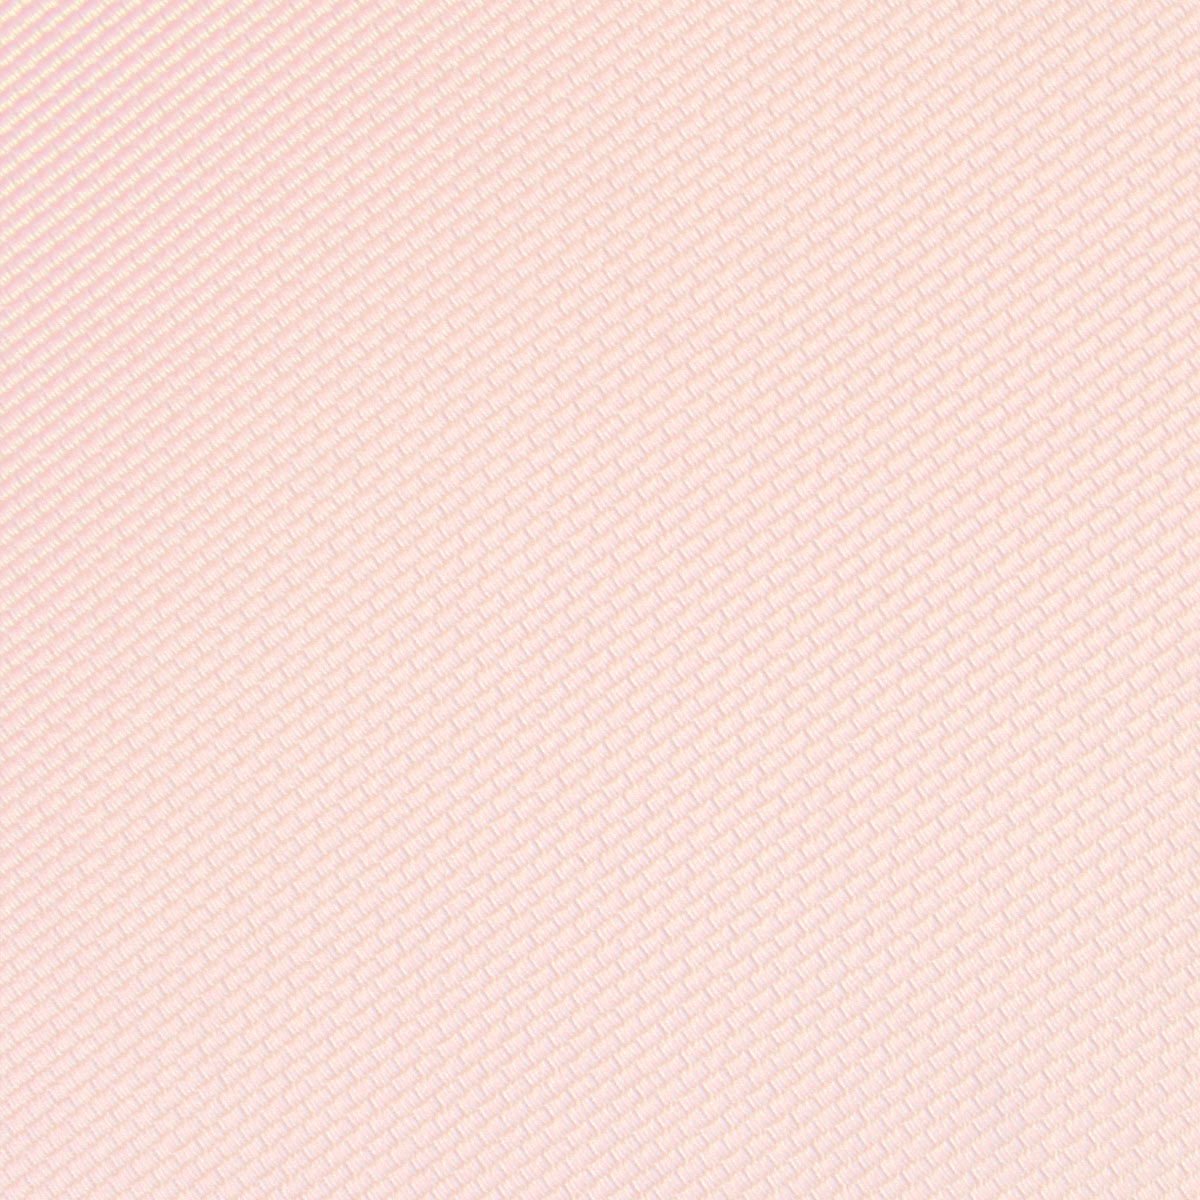 Misty Rose Pink Weave Skinny Tie Fabric